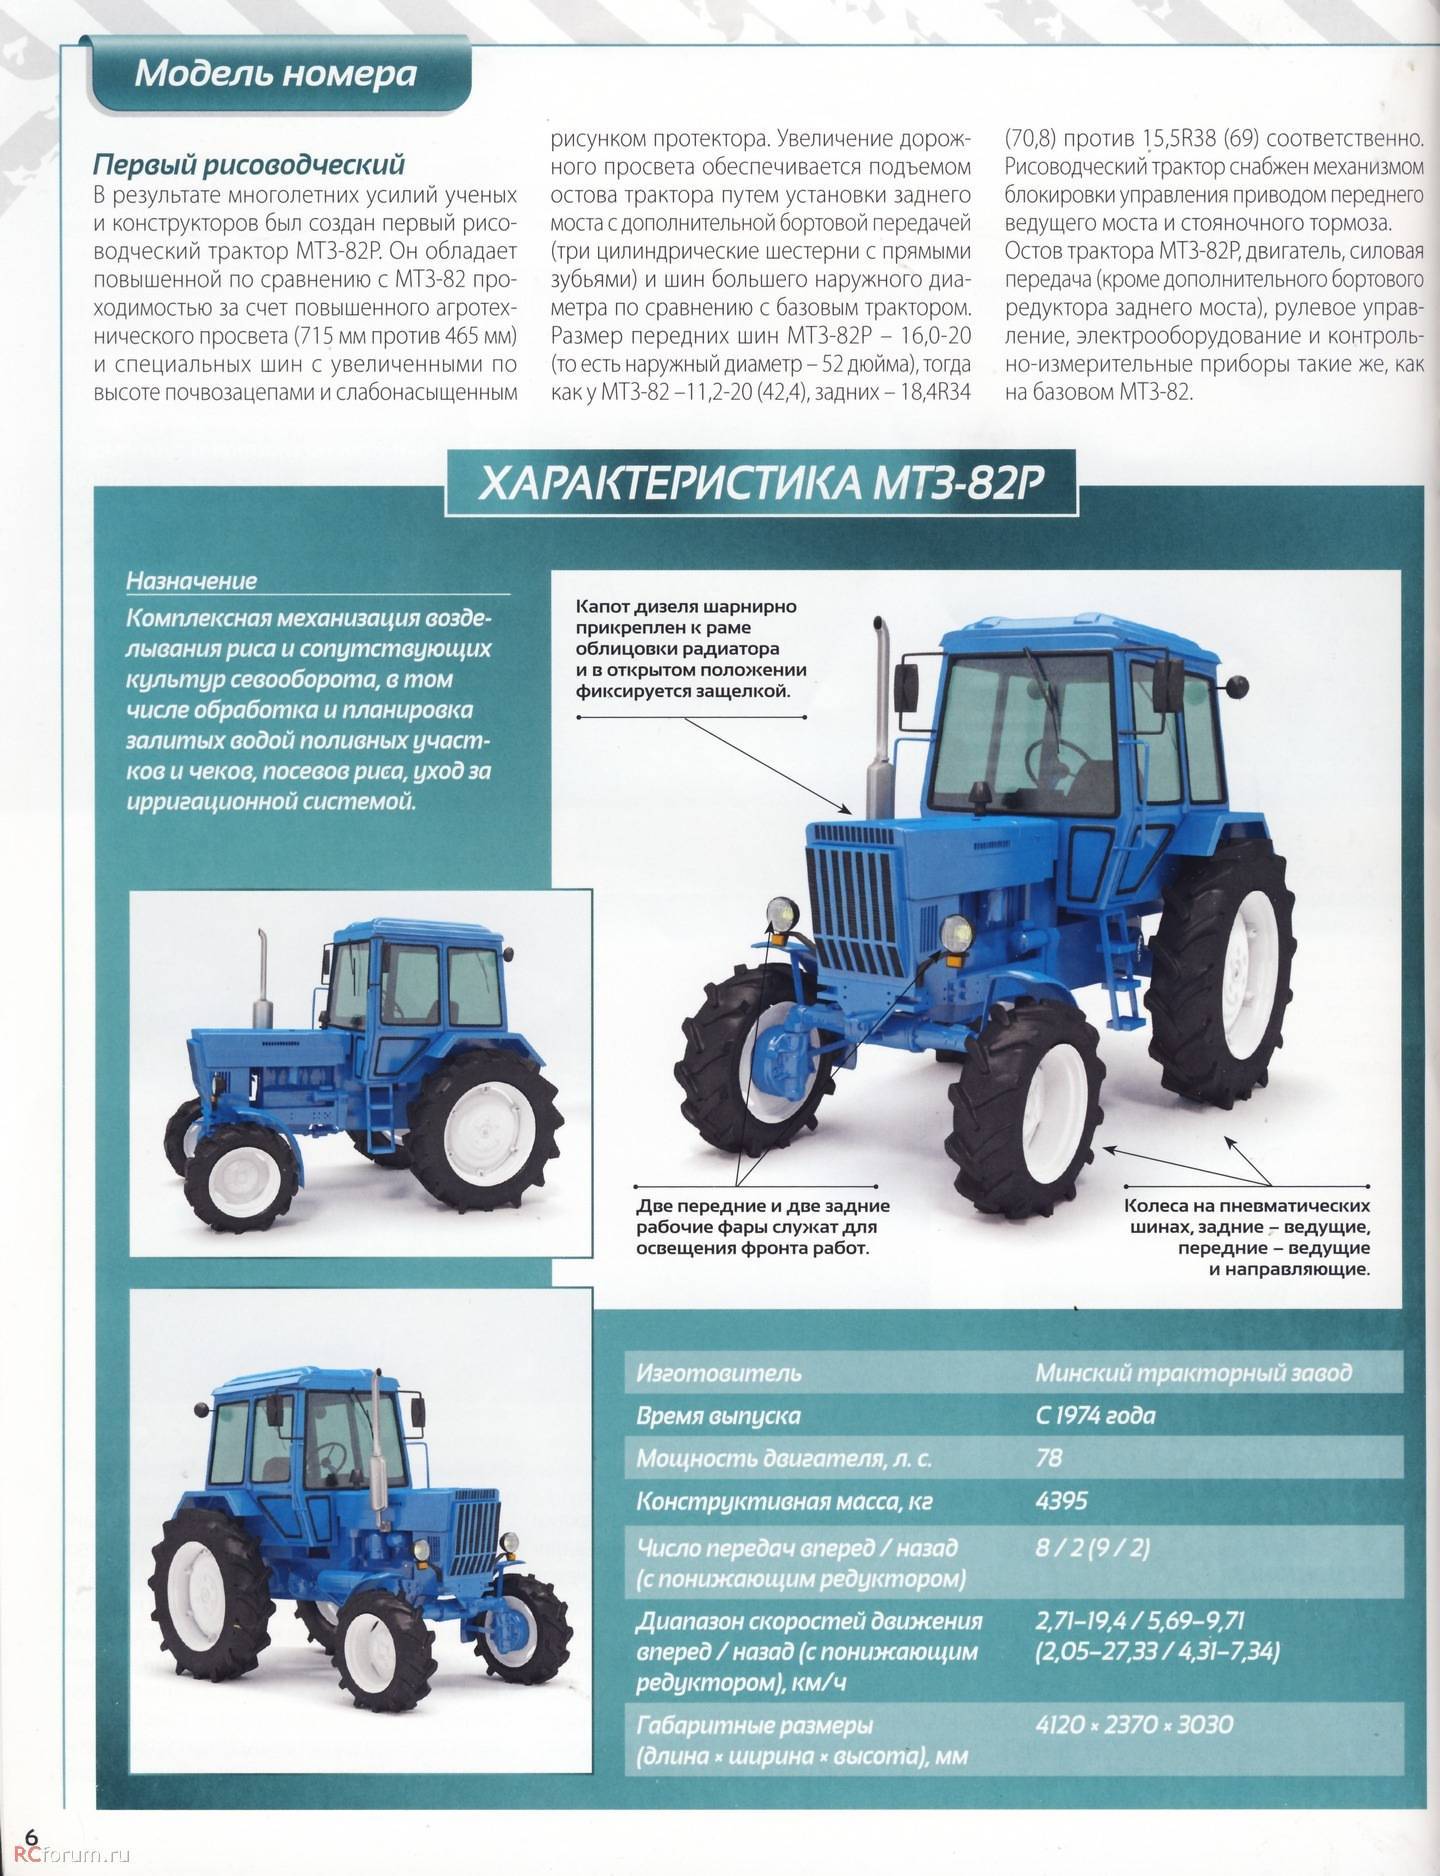 Мтз-50: технические характеристики, особенности эксплуатации трактора